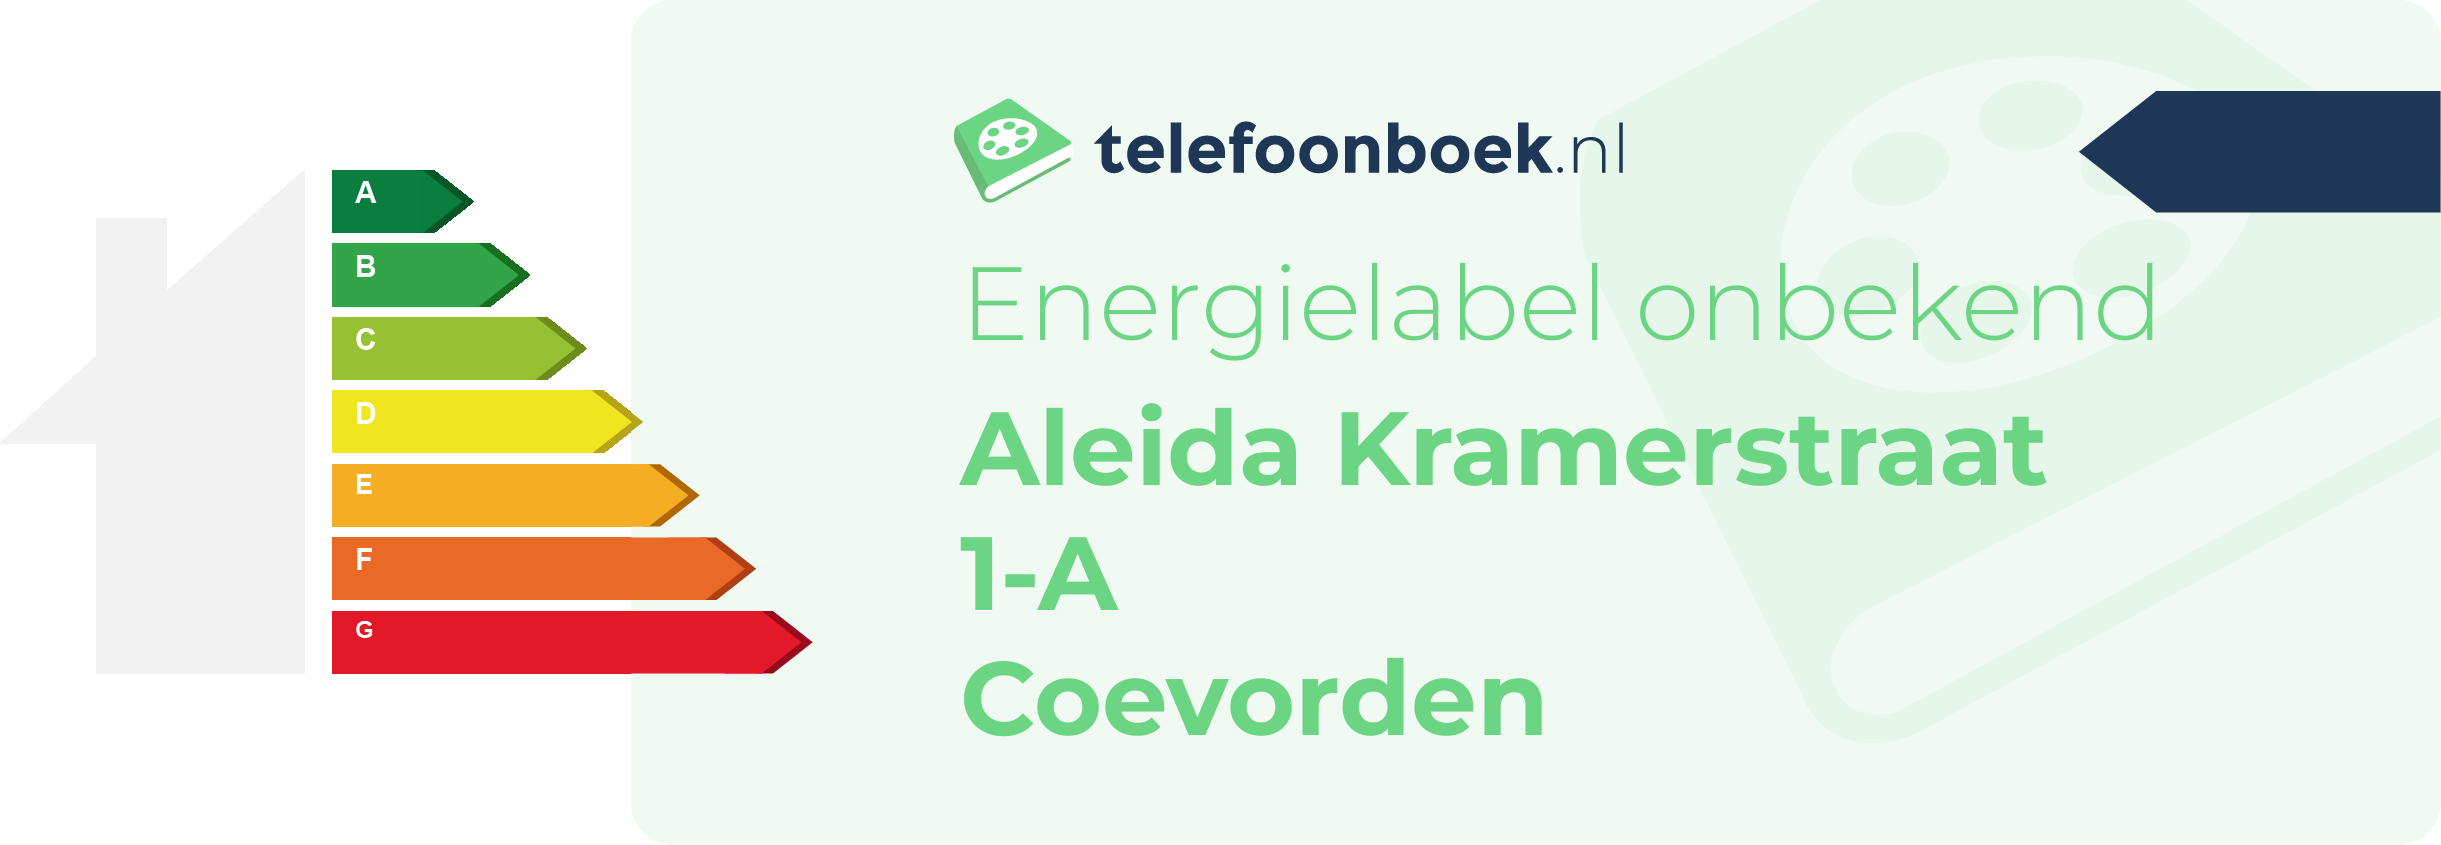 Energielabel Aleida Kramerstraat 1-A Coevorden